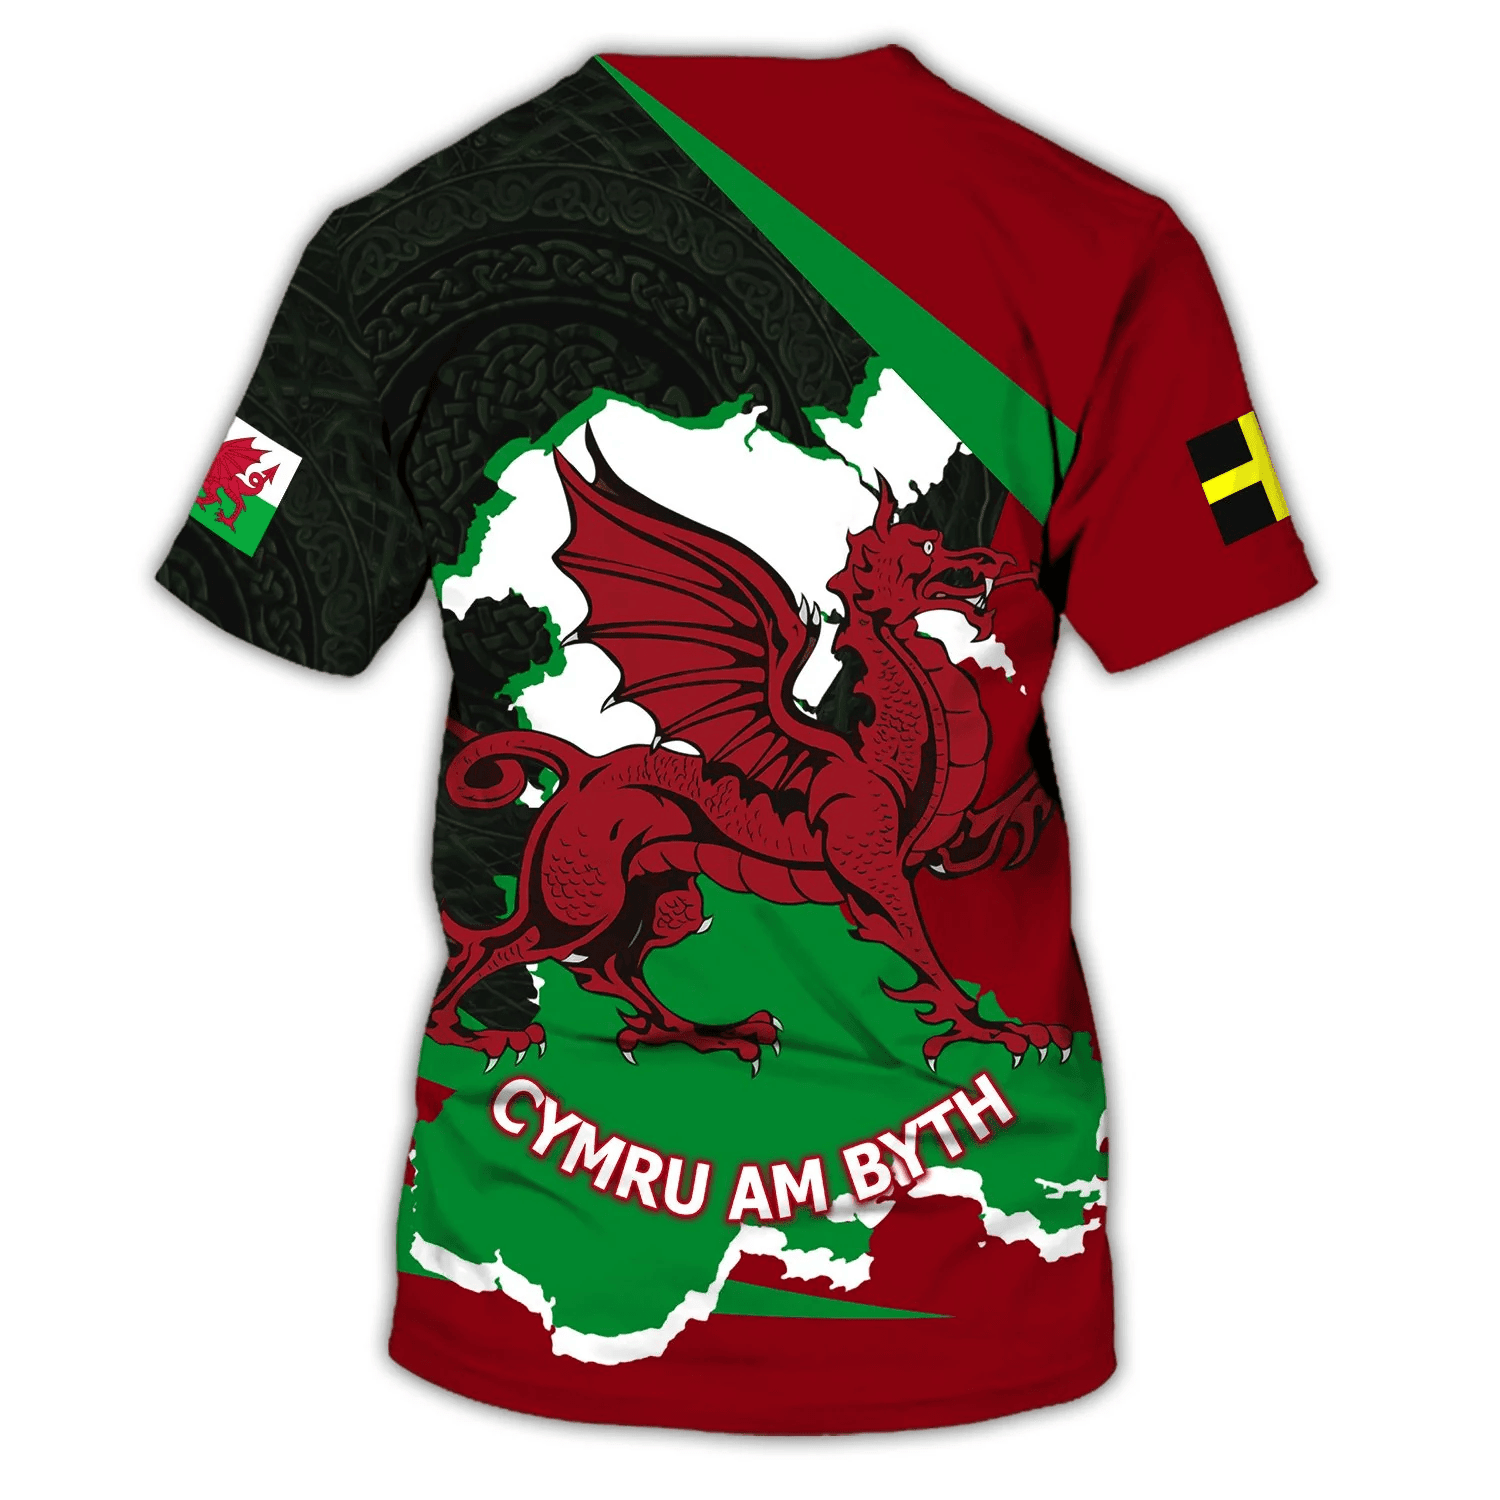 Wales - Cymru Am Byth - Personalized Name 3D Tshirt 1653 - Tad